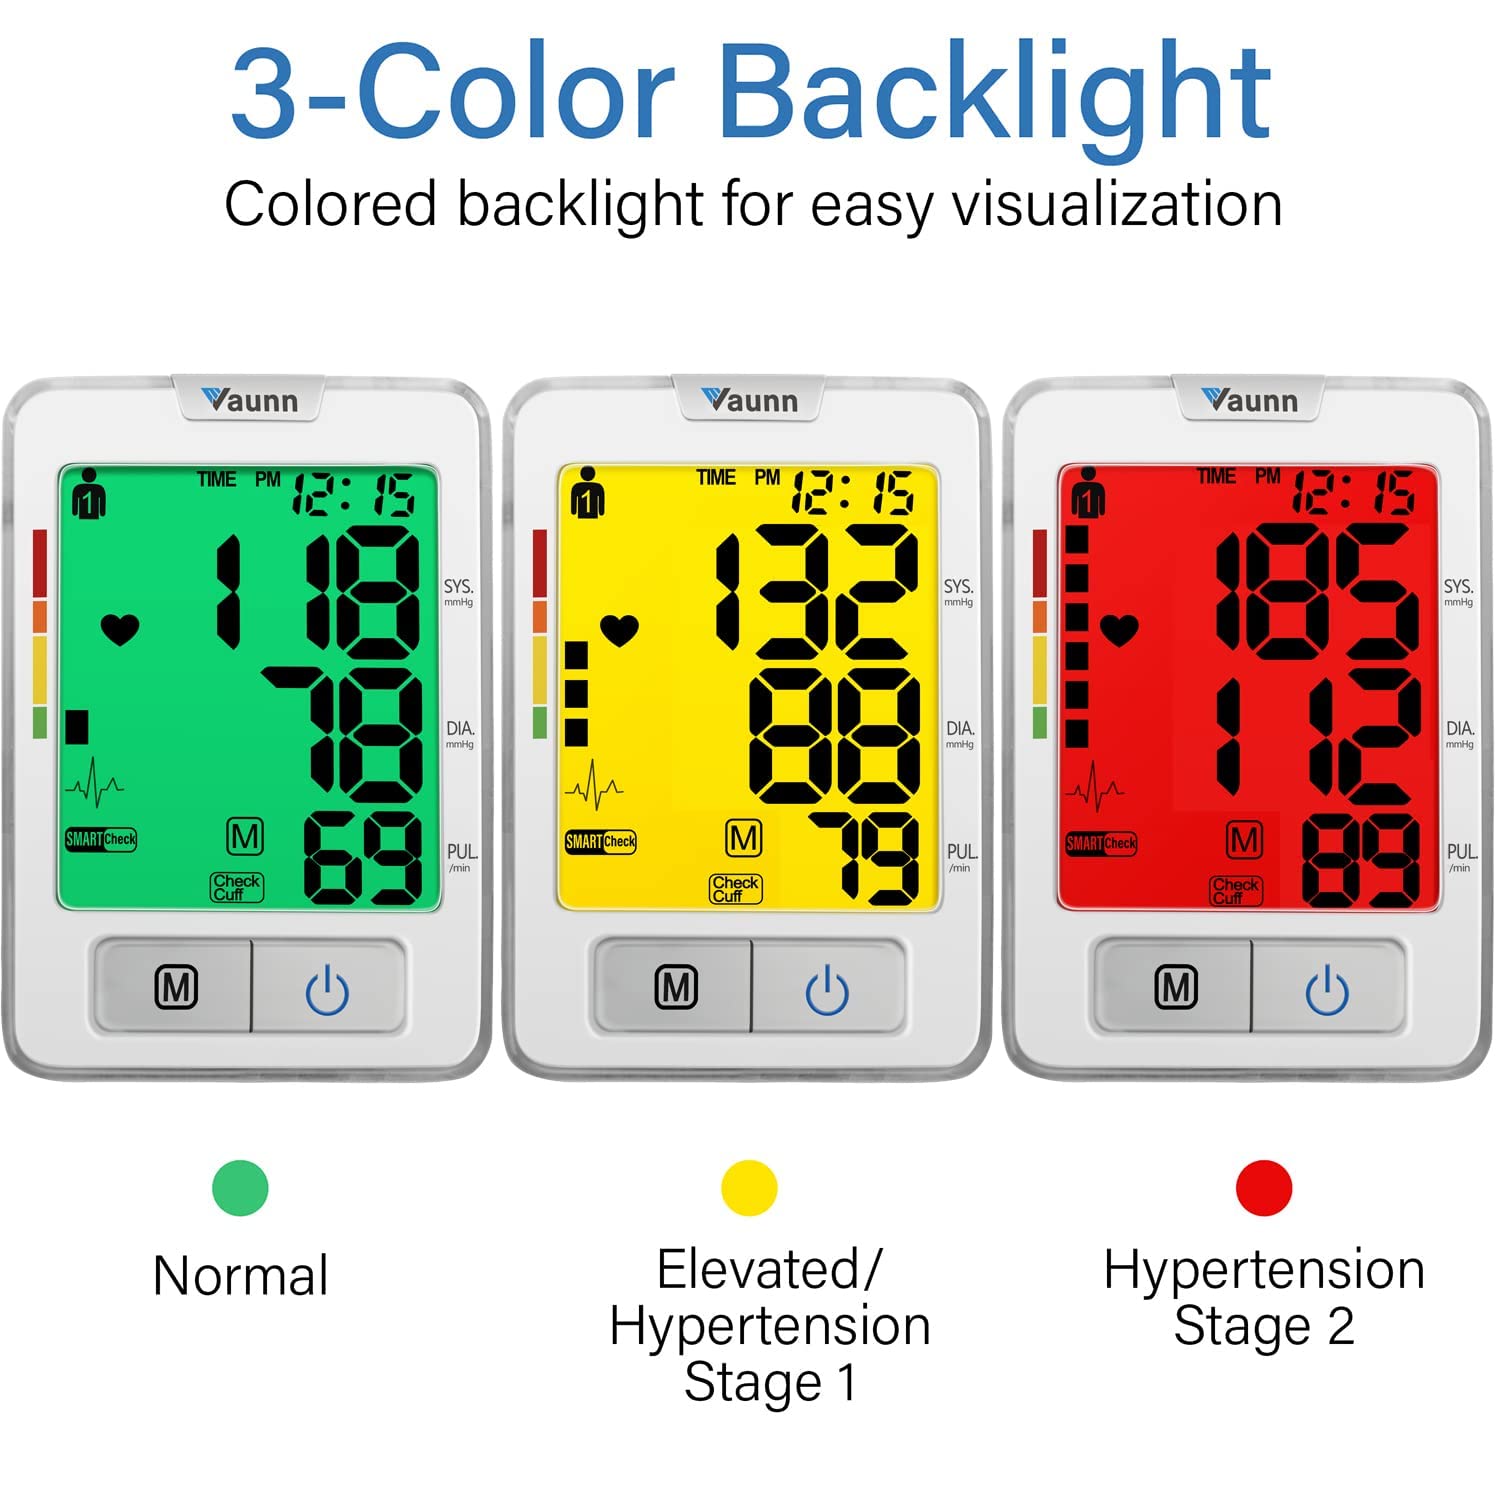 Vaunn Medical Adjustable Height Toilet Safety Frame Rail and Blood Pressure Monitor Machine Bundle